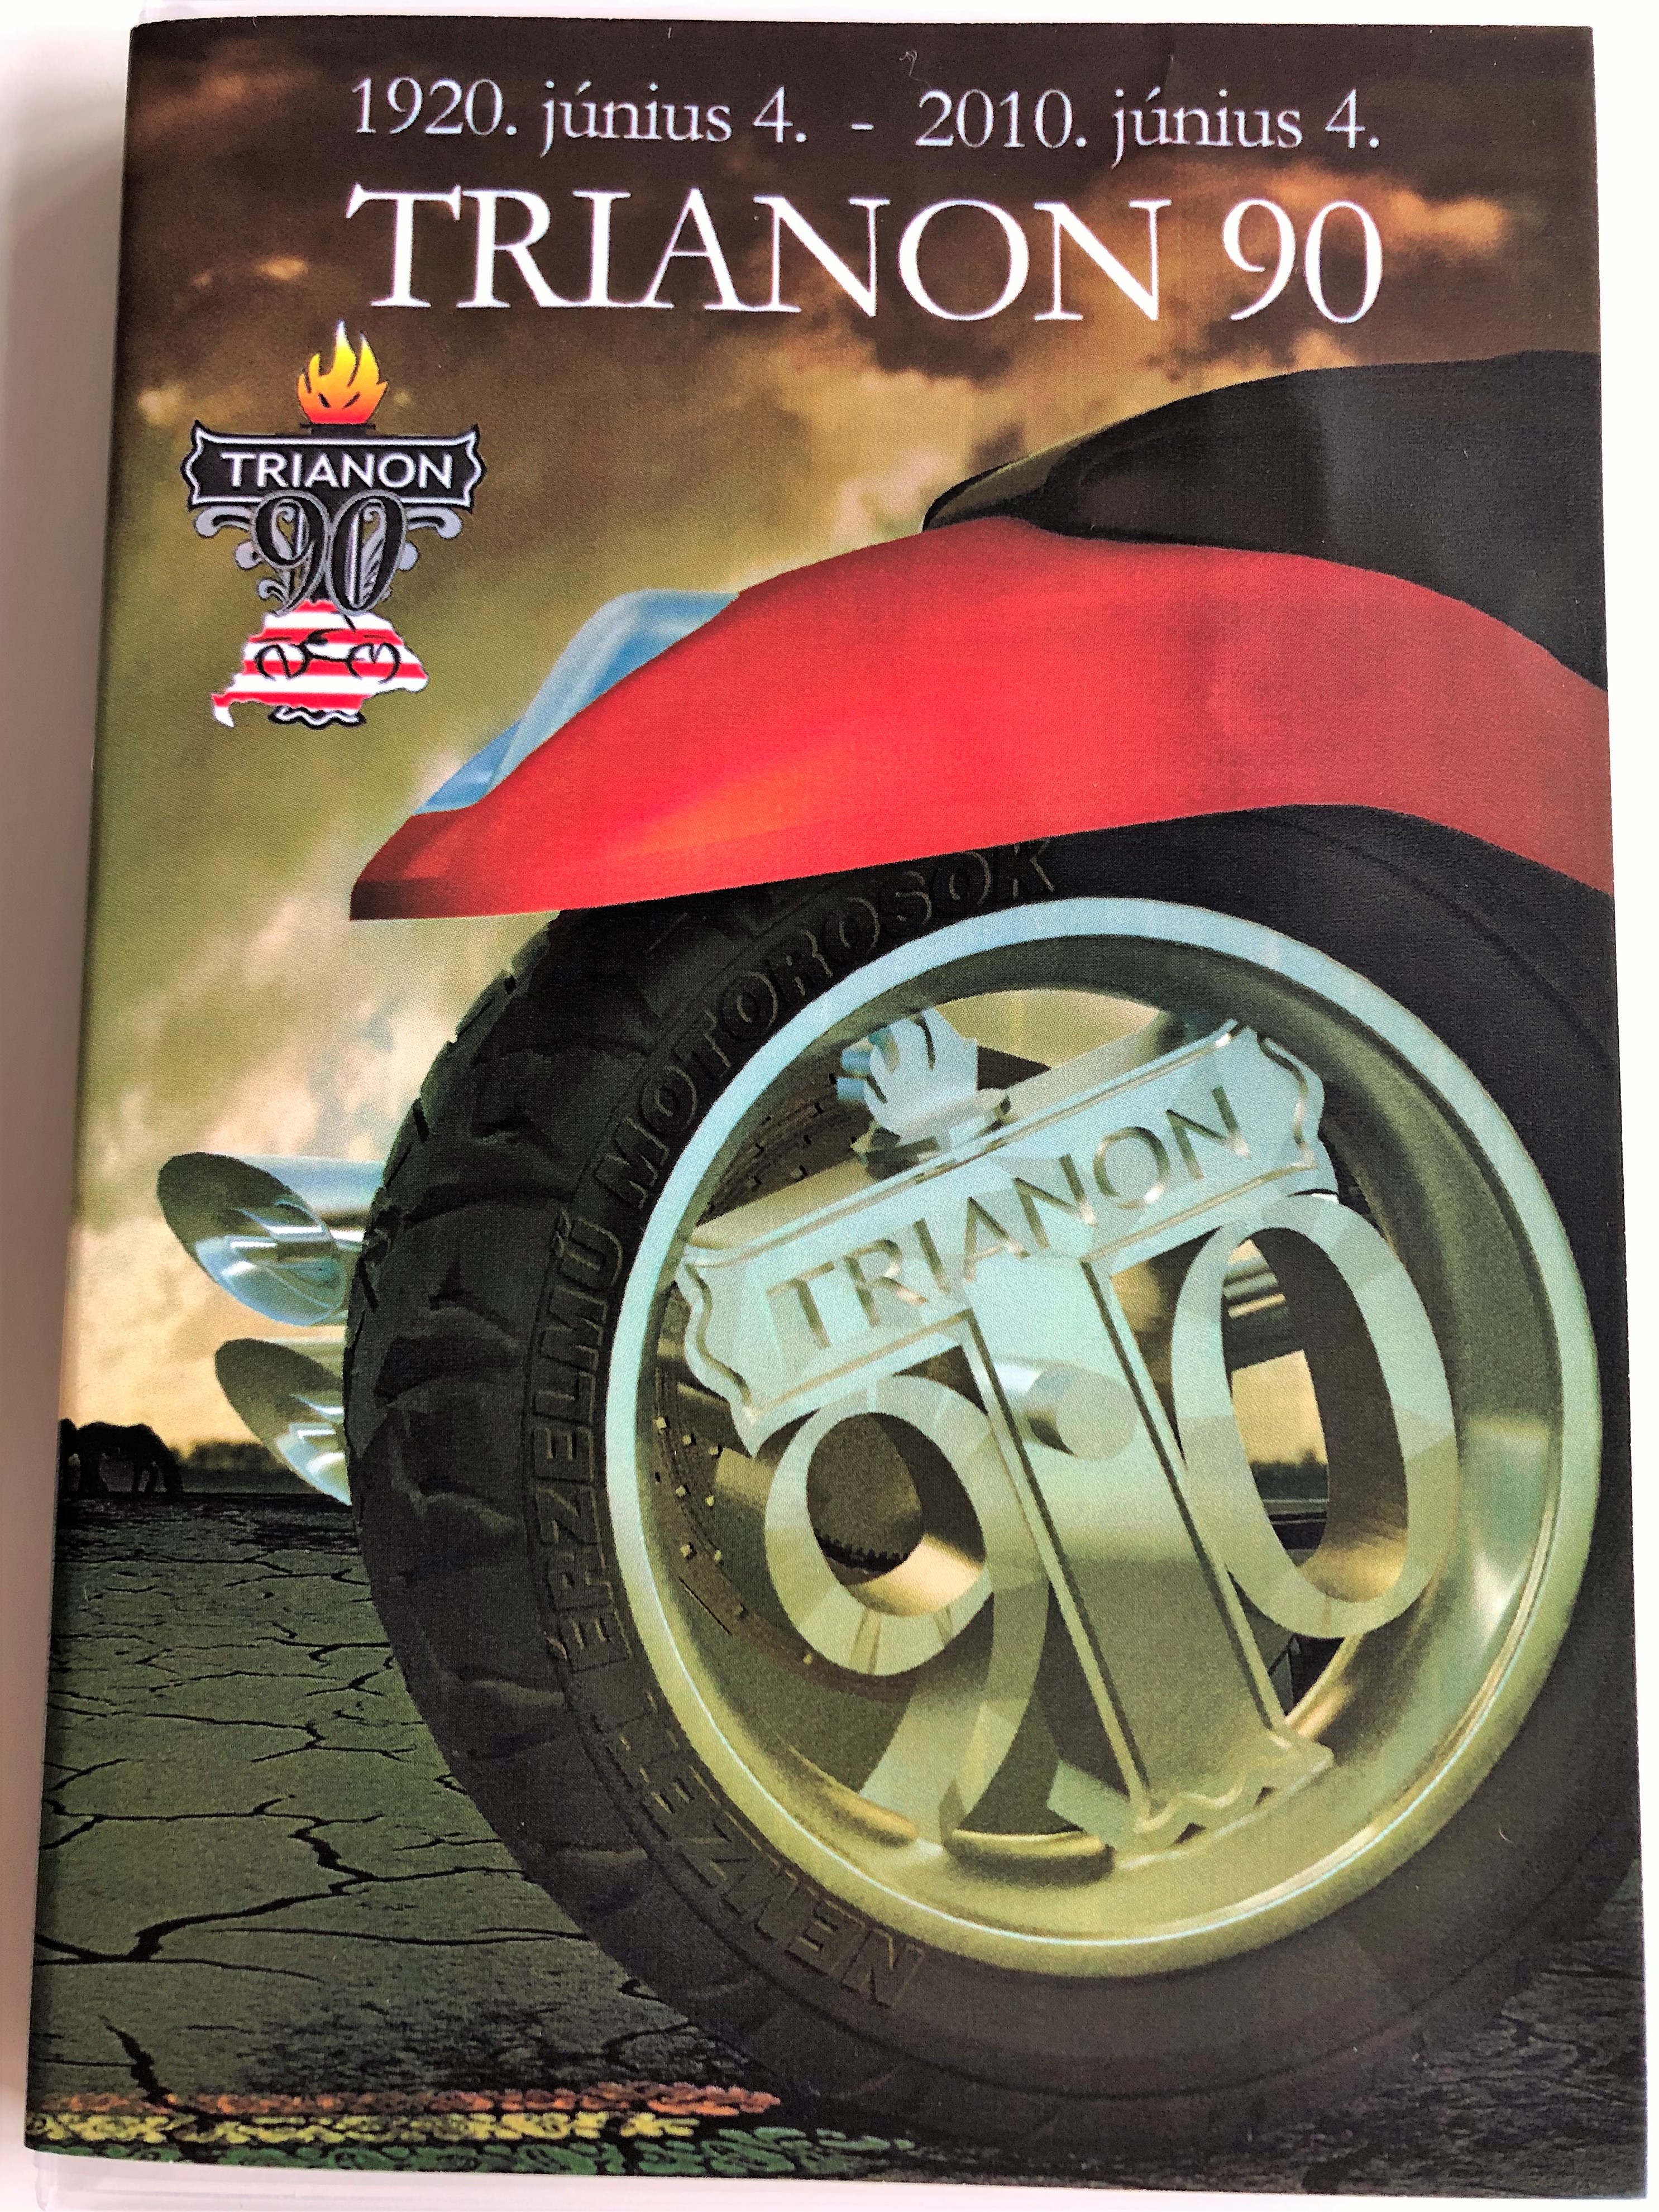 trianon-90-dvd-2010-excerpts-from-koltay-g-bor-s-film-trianon-nemzeti-rzelm-motorosok-national-minded-bikers-of-hungary-1-.jpg